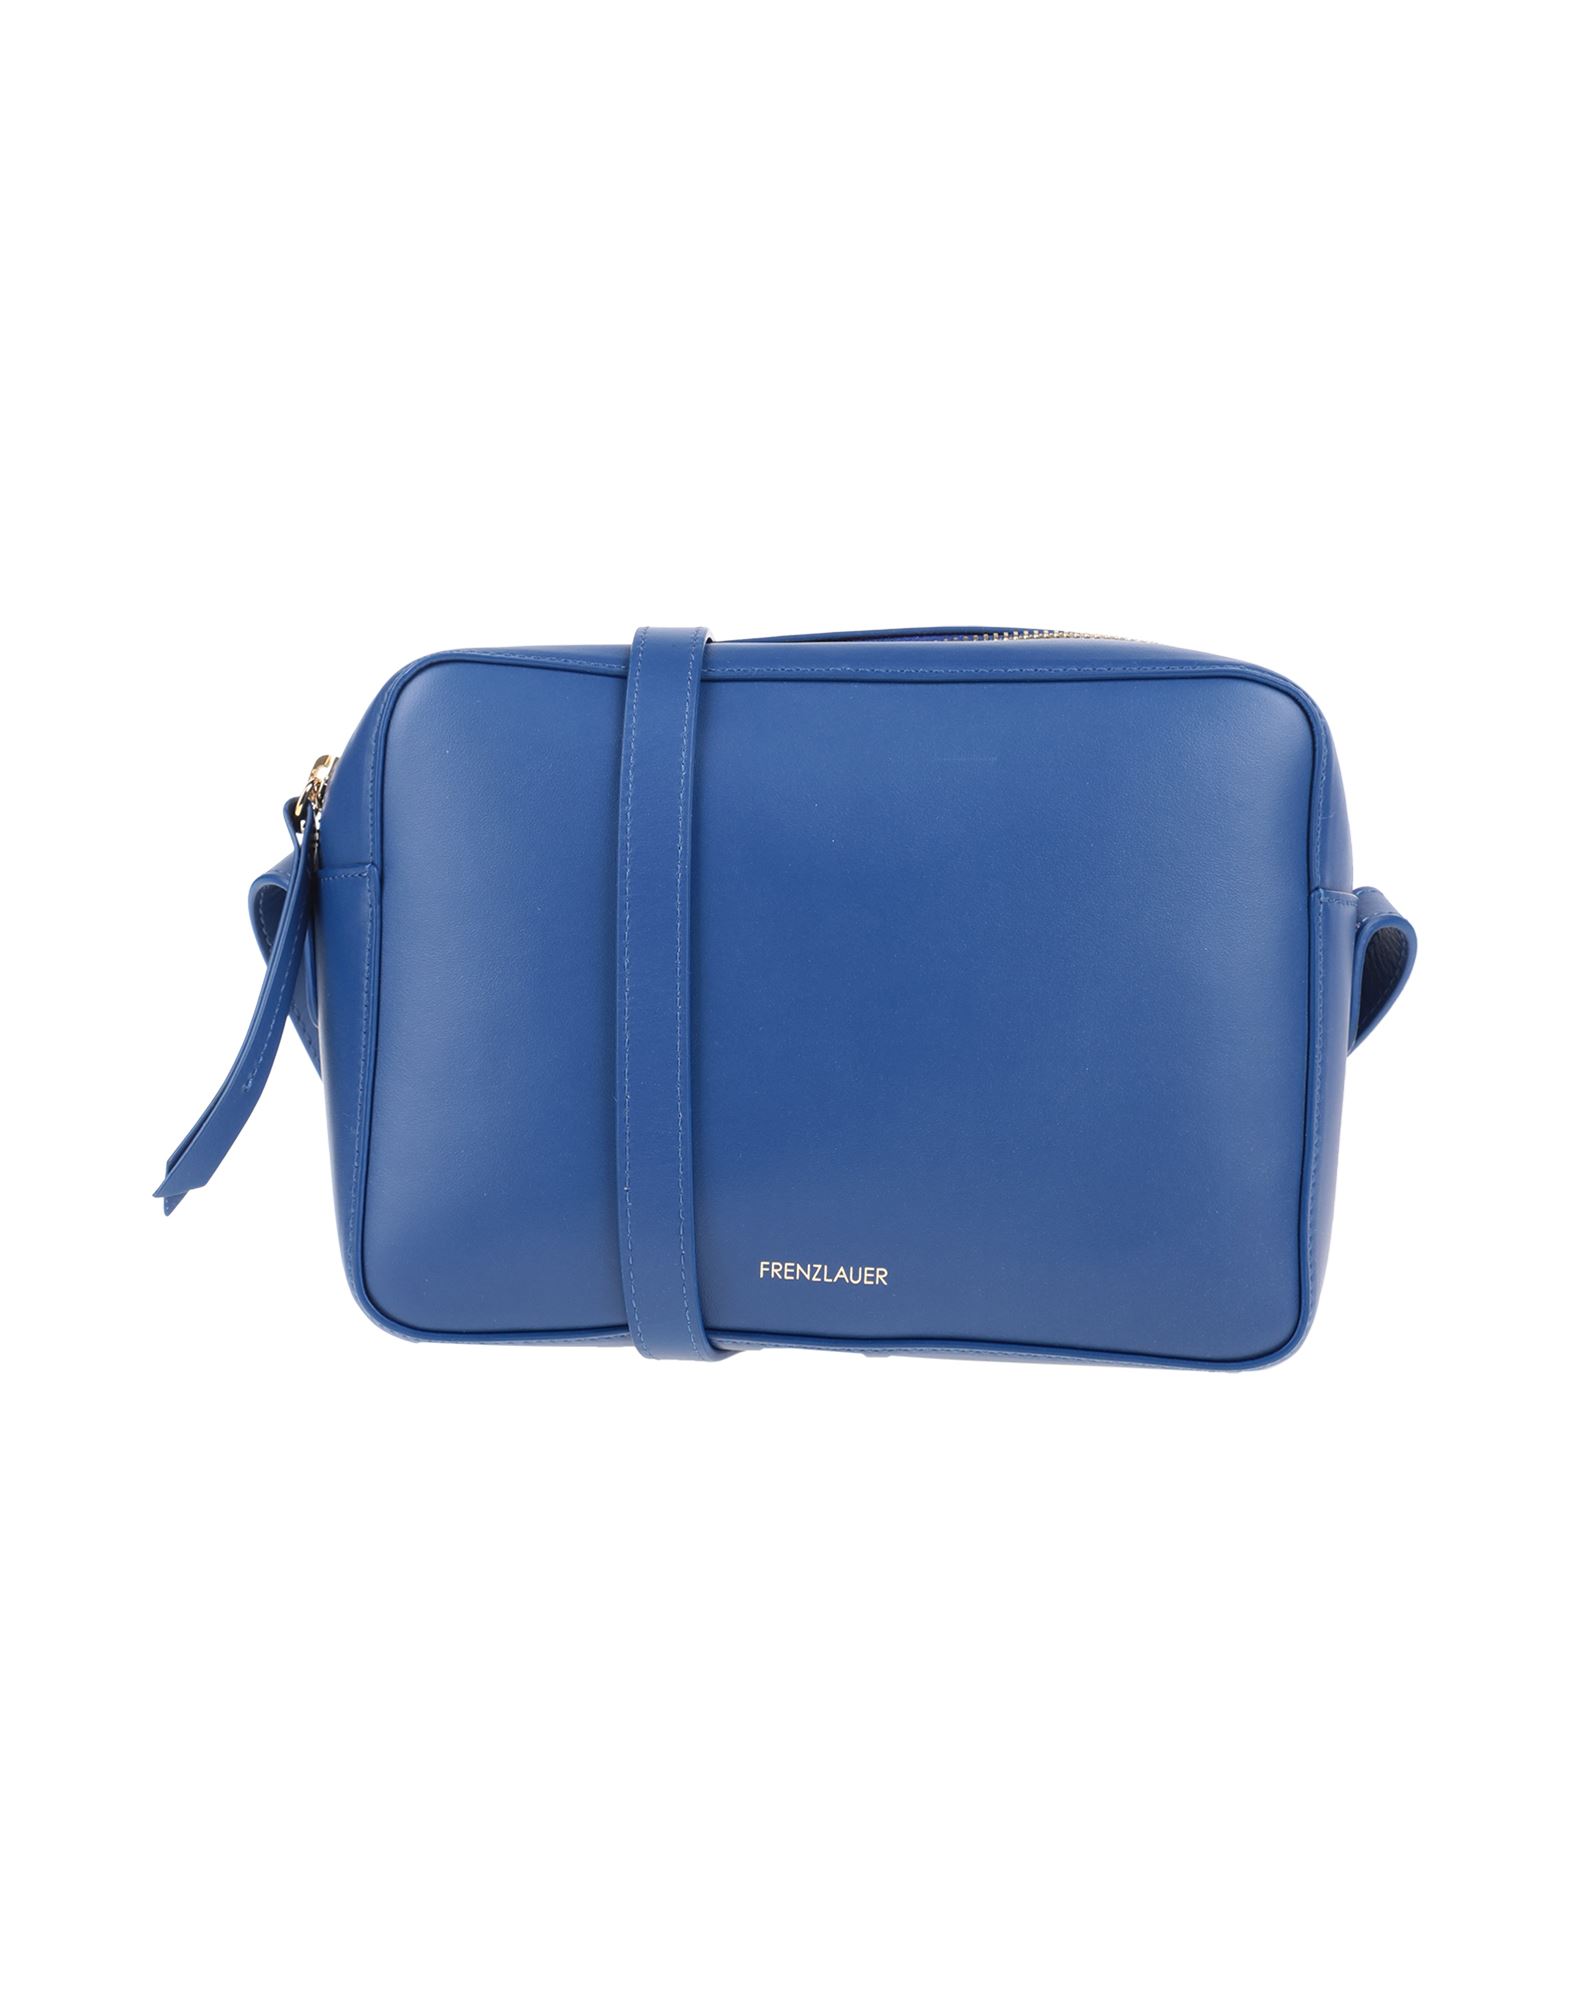 Frenzlauer Handbags In Blue